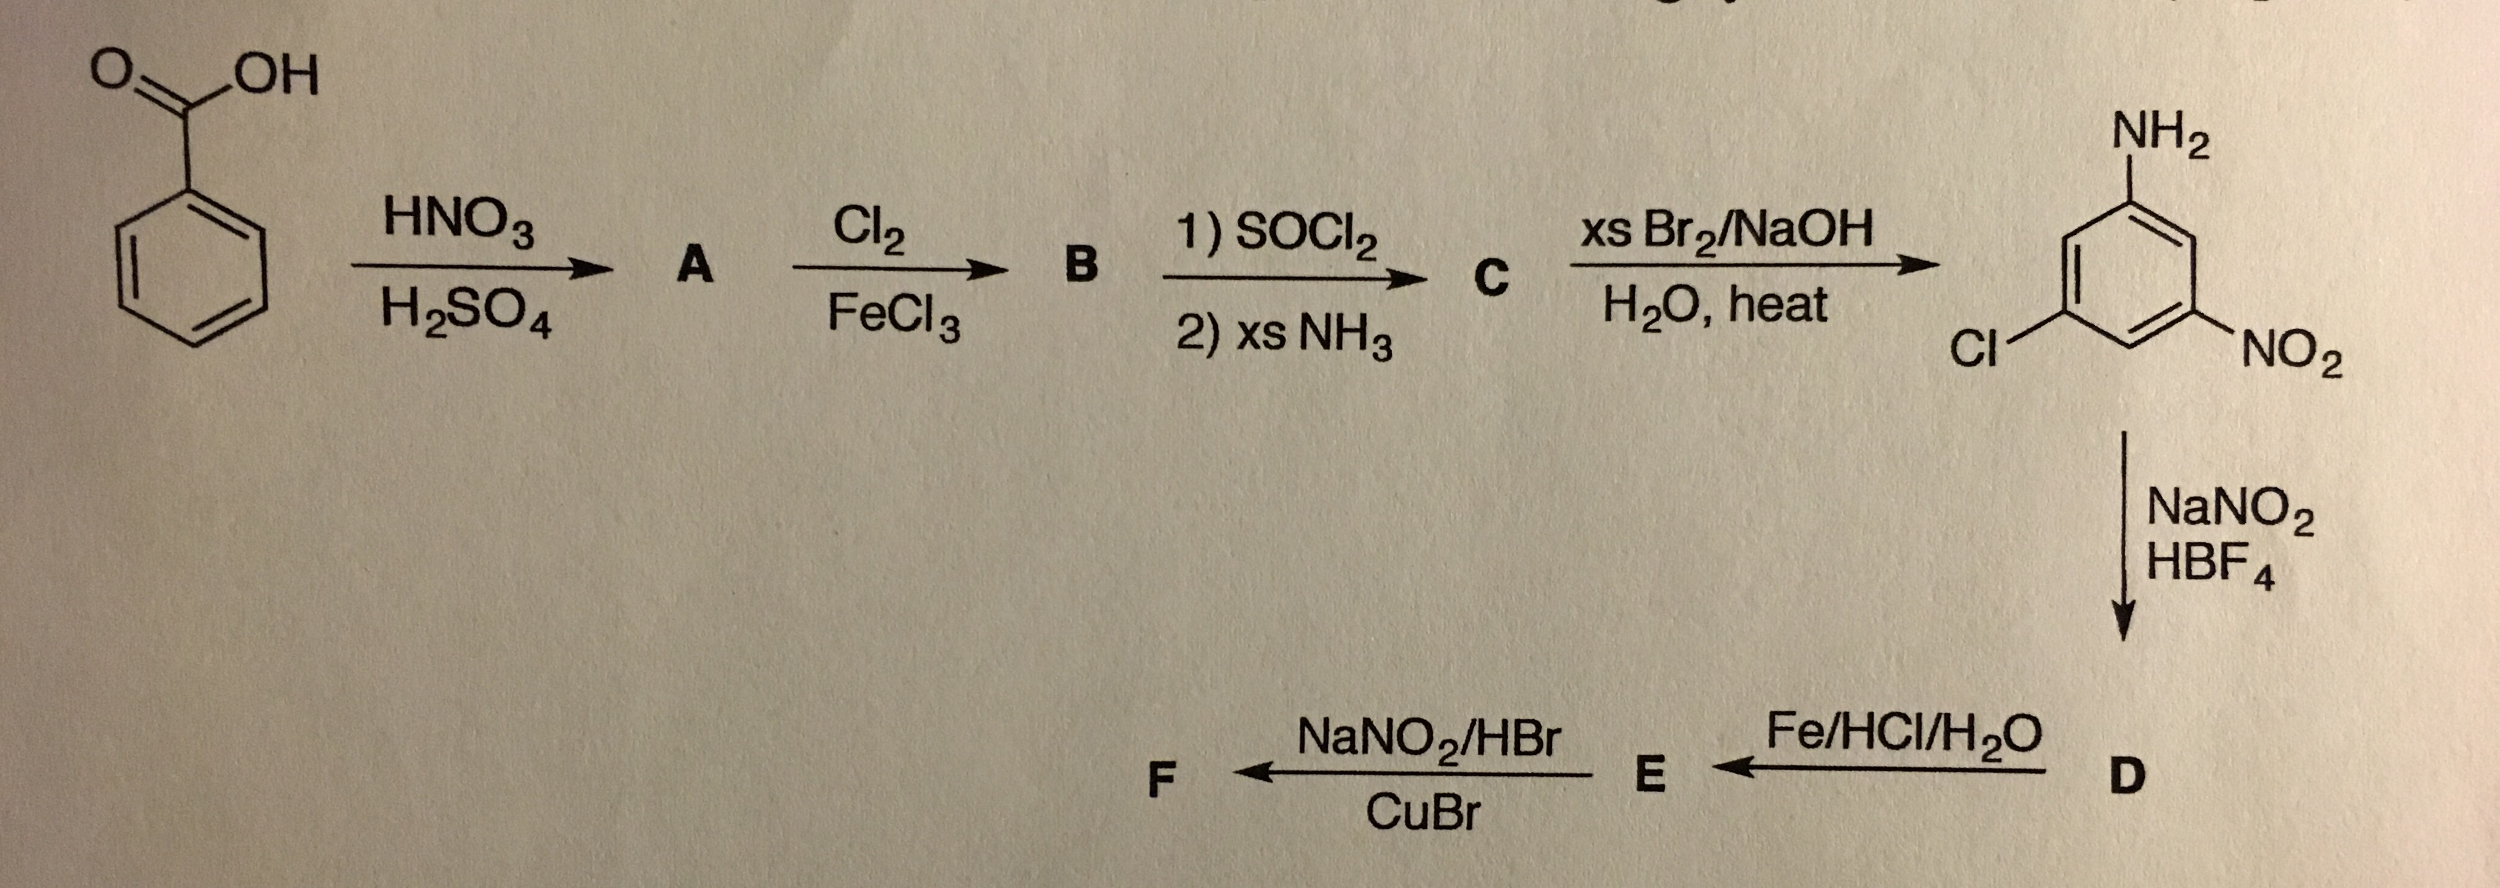 Zn nano3 naoh. Ch3nh3br + hno2. Бензол hno2. Бензол hno3 h2so4. Метилбензол + 2cl2 al2o3.